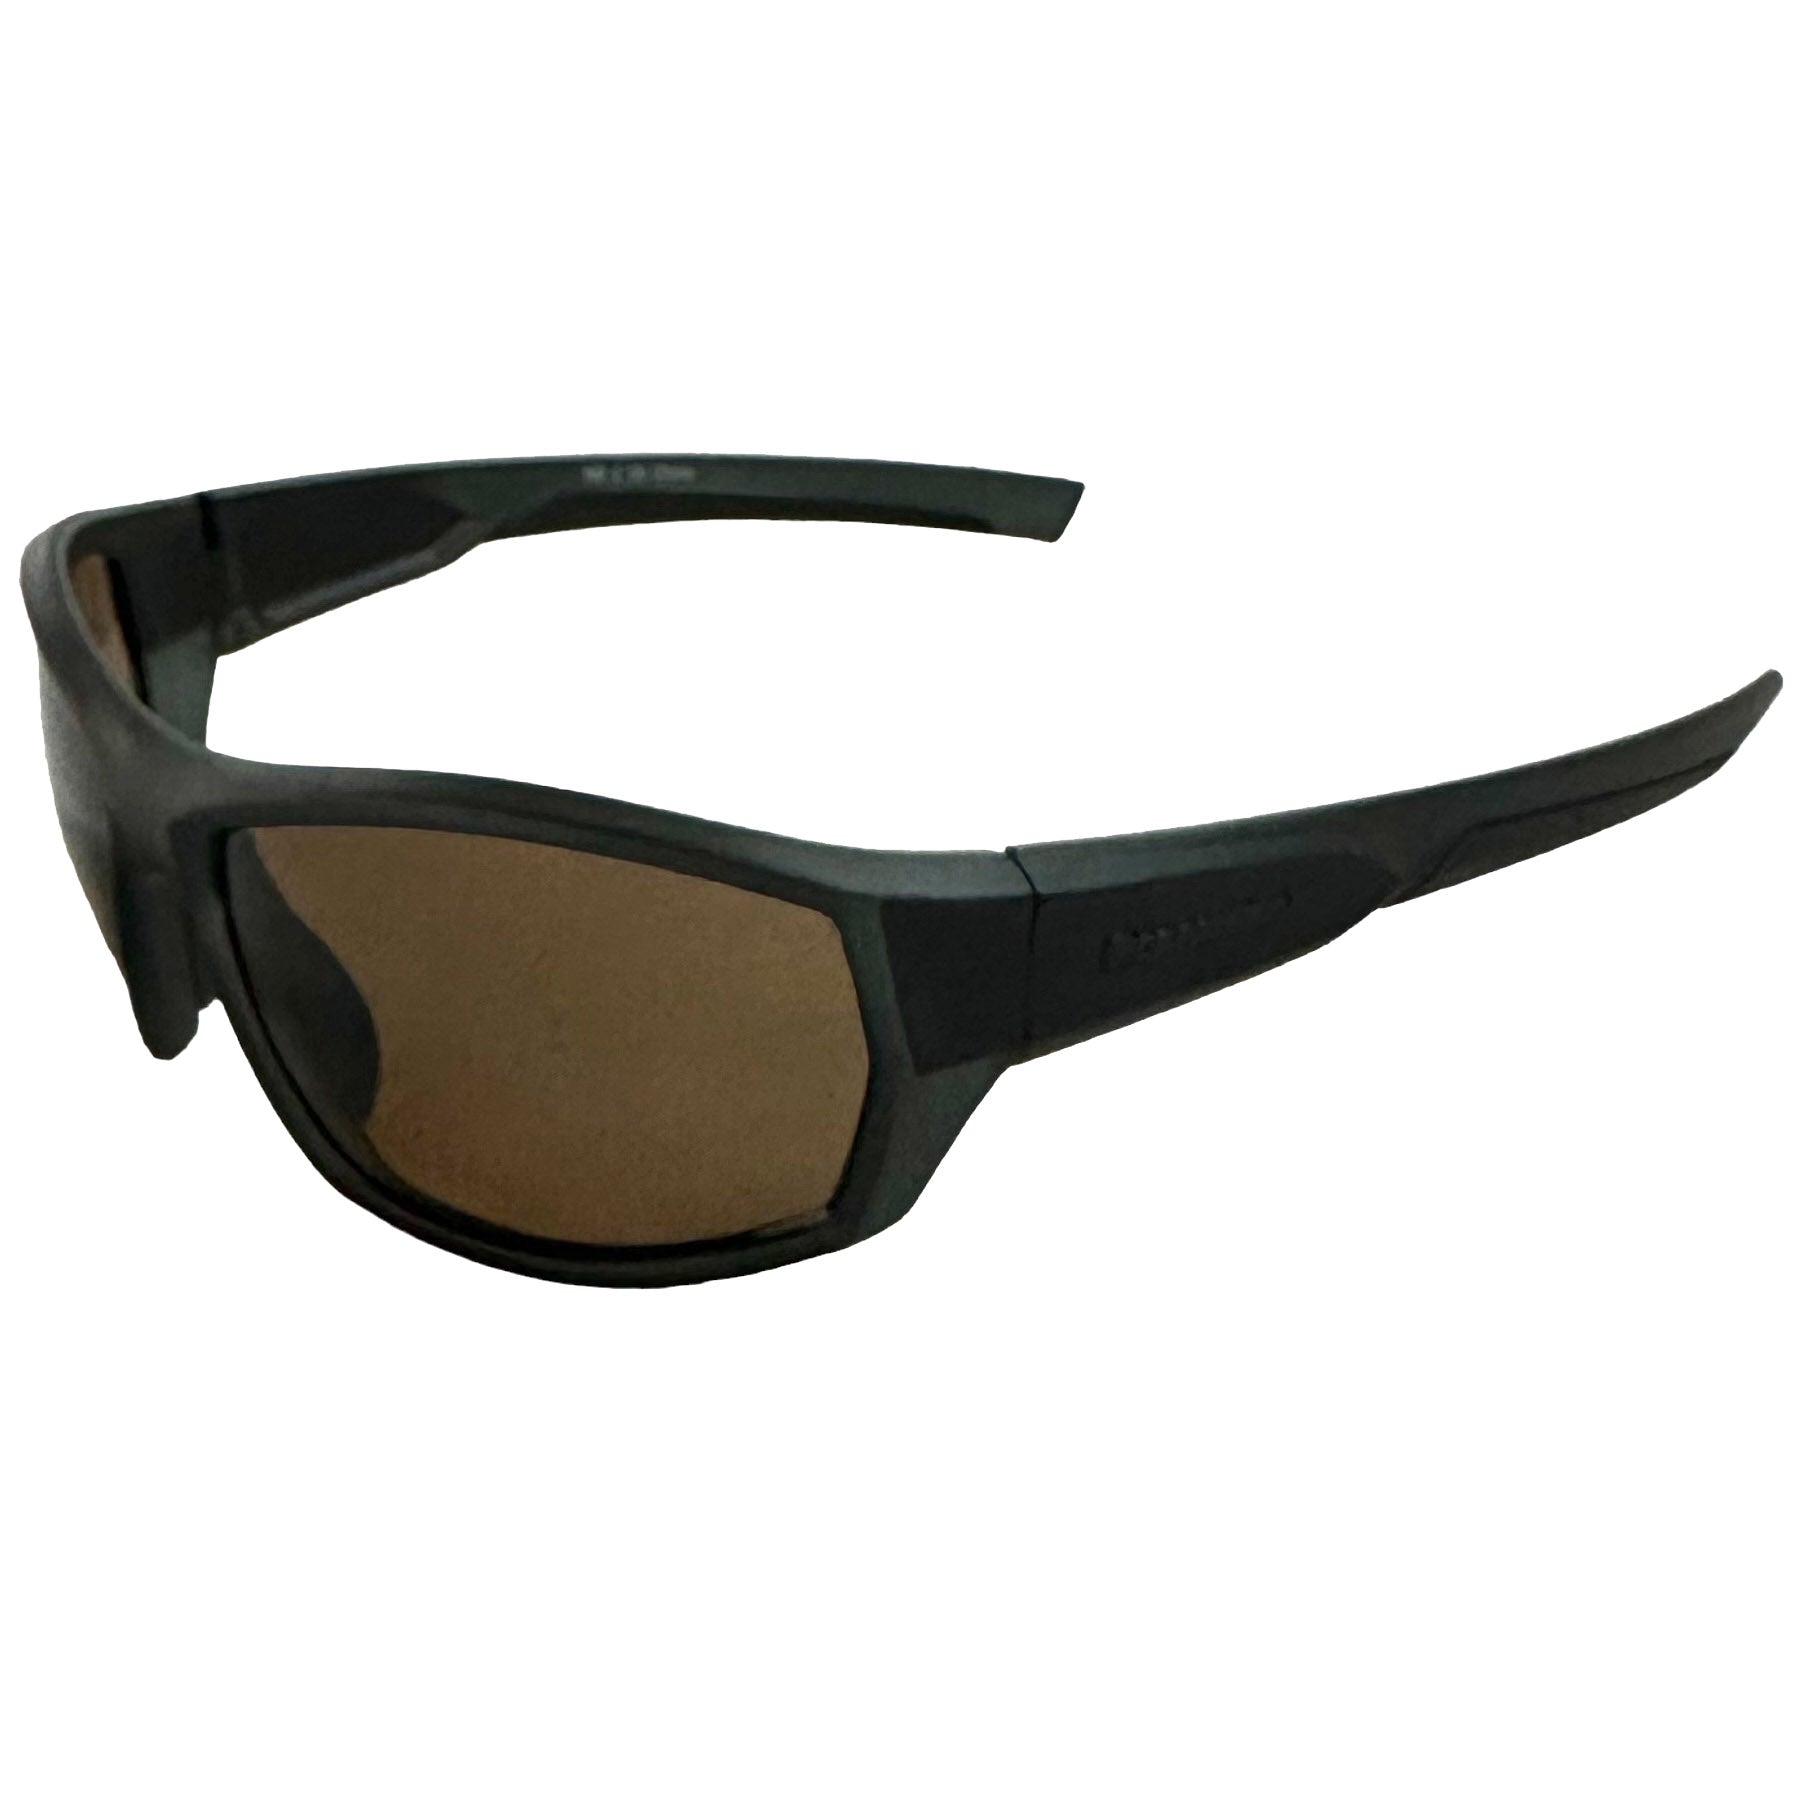 RB2 Polarized Sunglasses